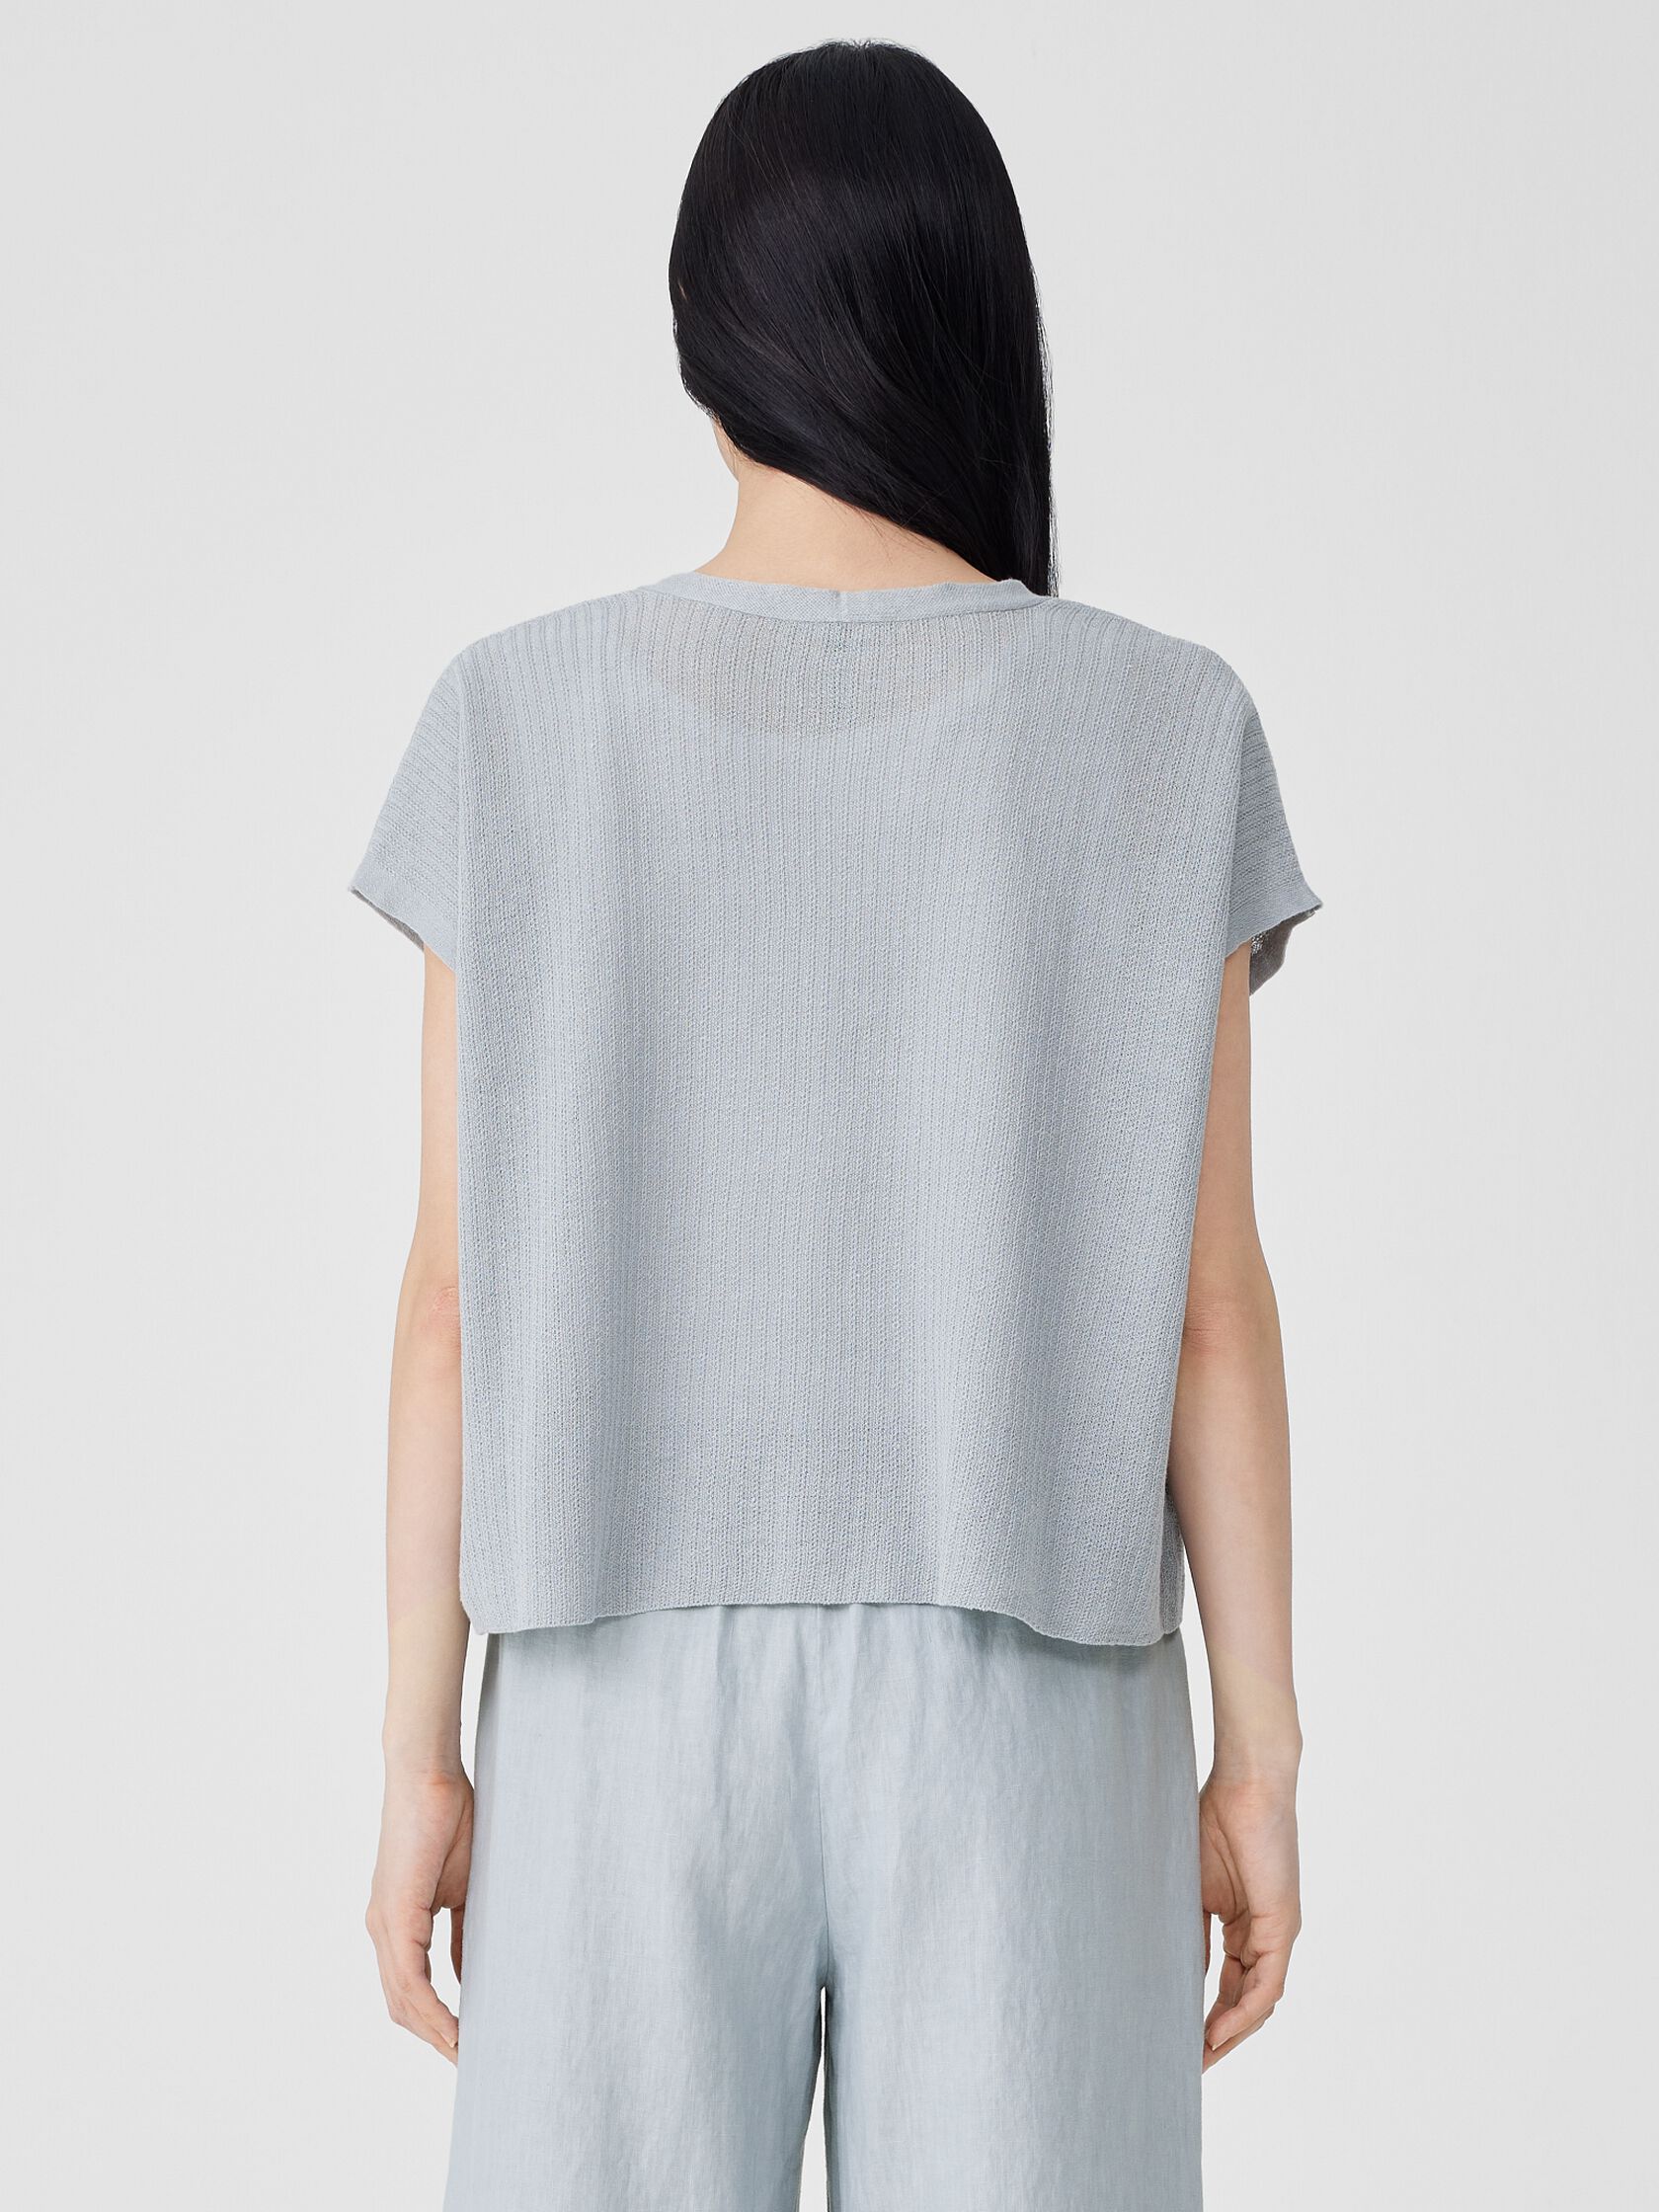 Organic Linen Cotton Short-Sleeve Cardigan